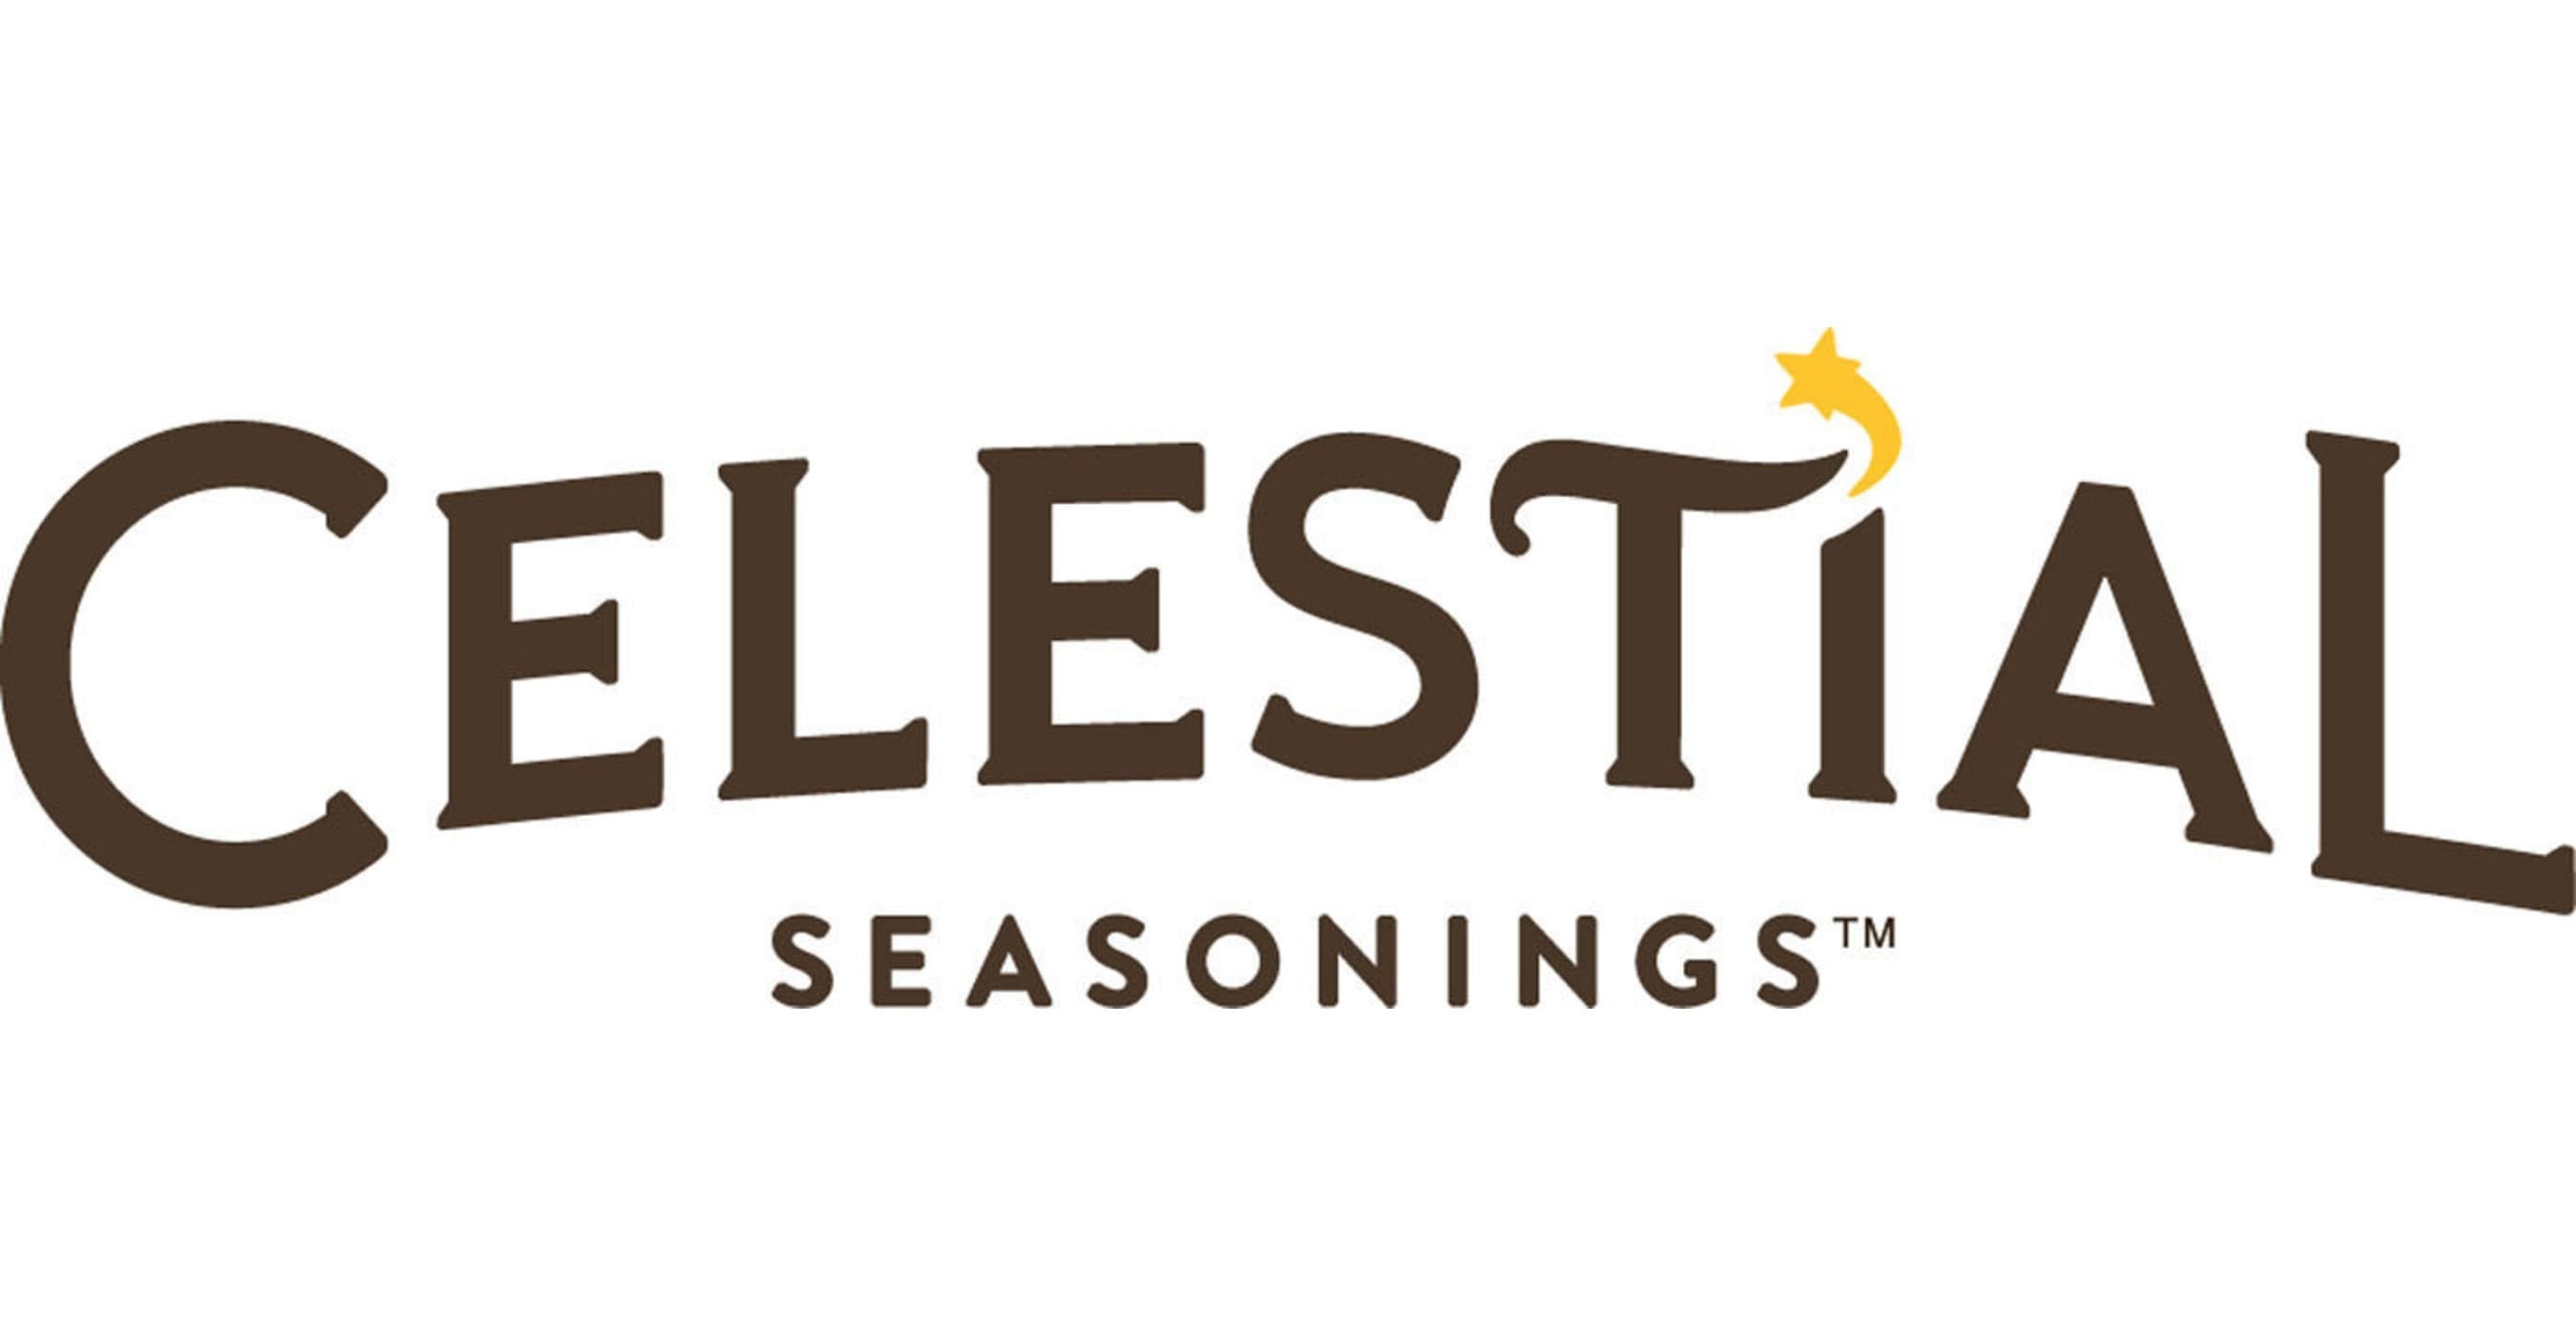 Celestial Seasonings Tea